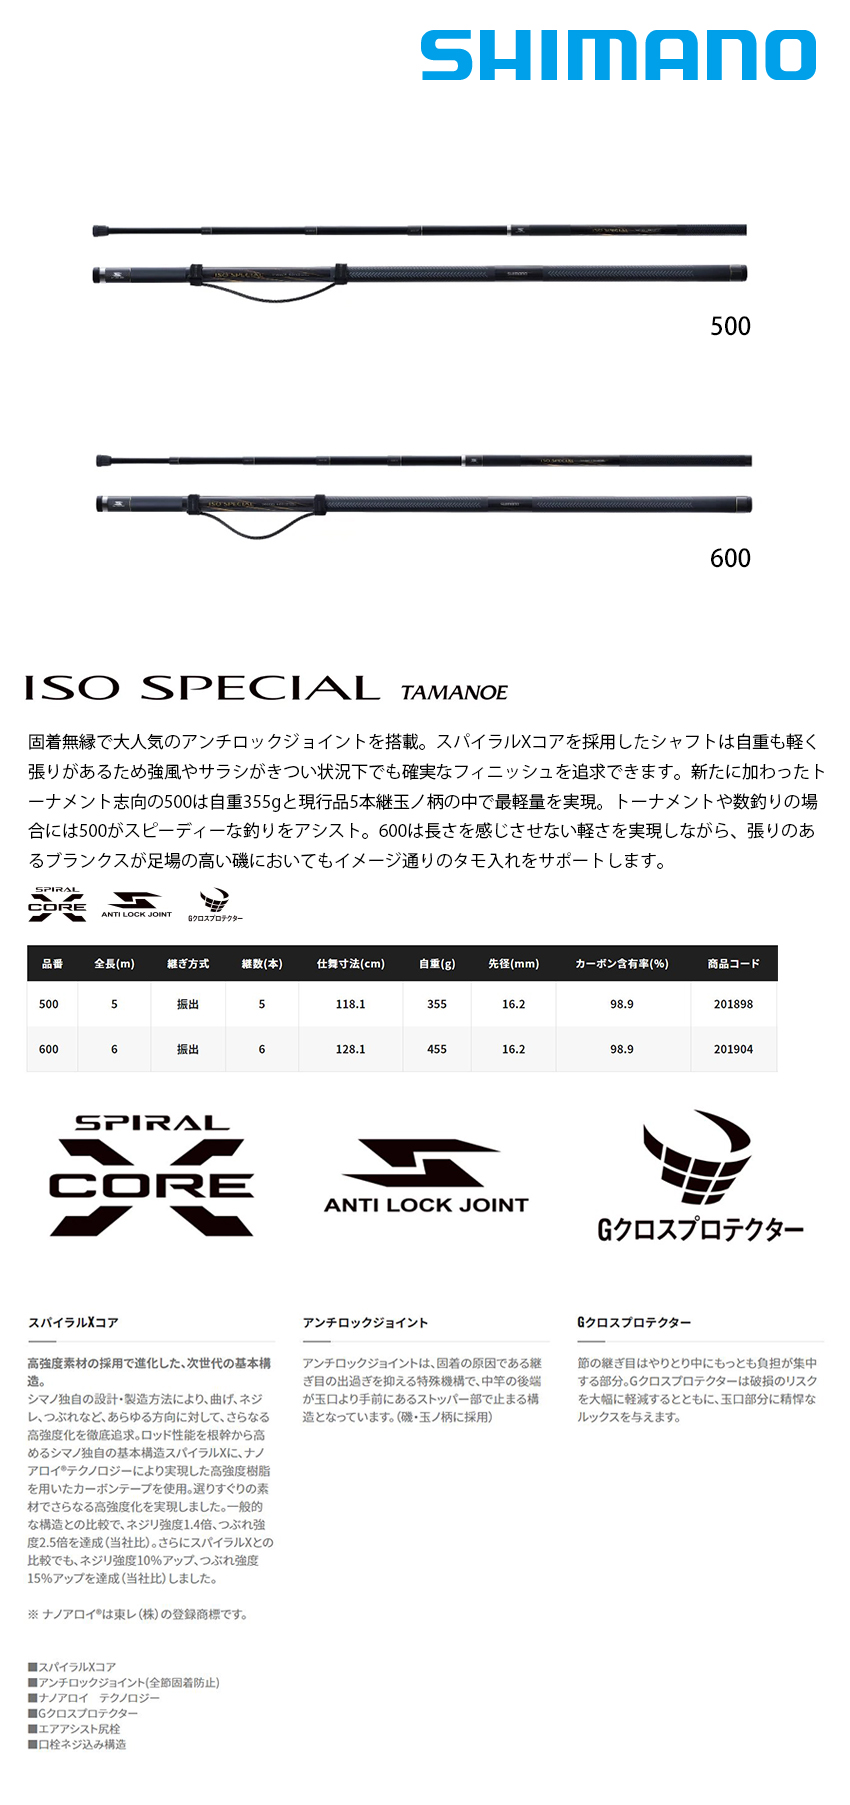 SHIMANO 21 ISO SPECIAL TAMANOE 500 [磯玉柄] - 漁拓釣具官方線上購物平台